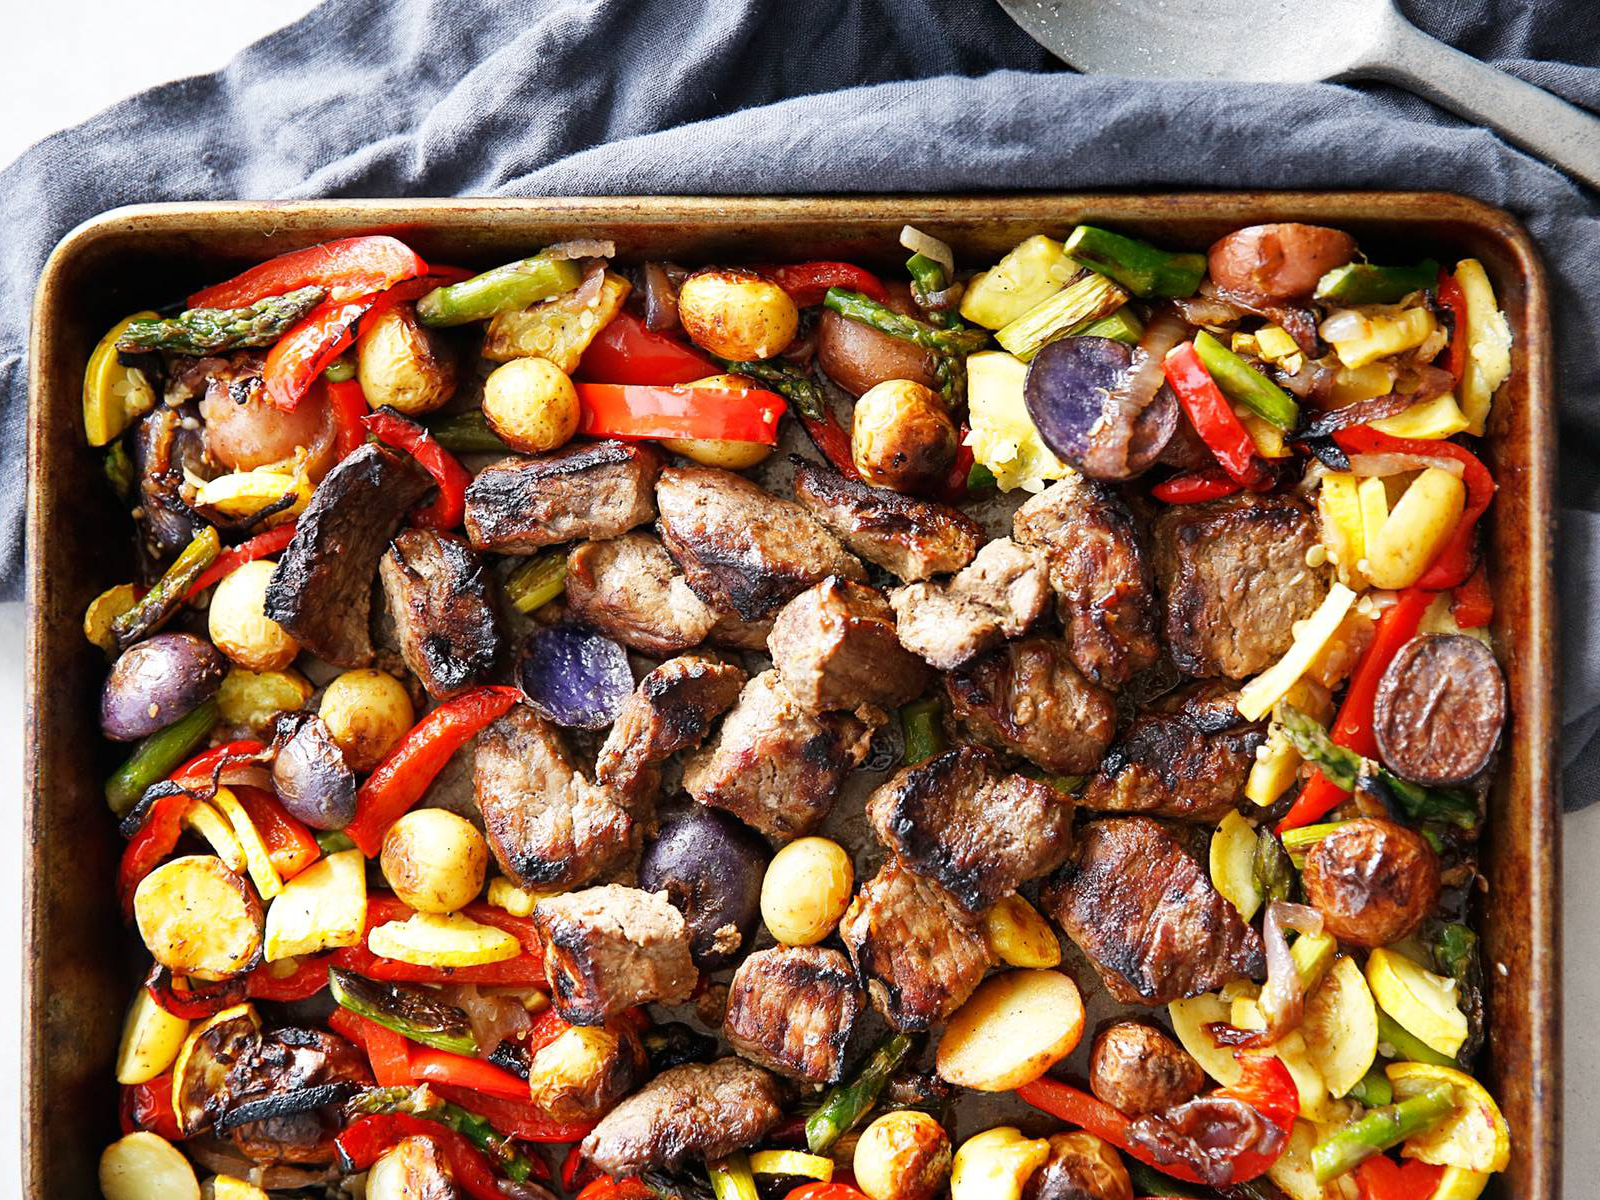 steak tip sheet pan dinner with veggies